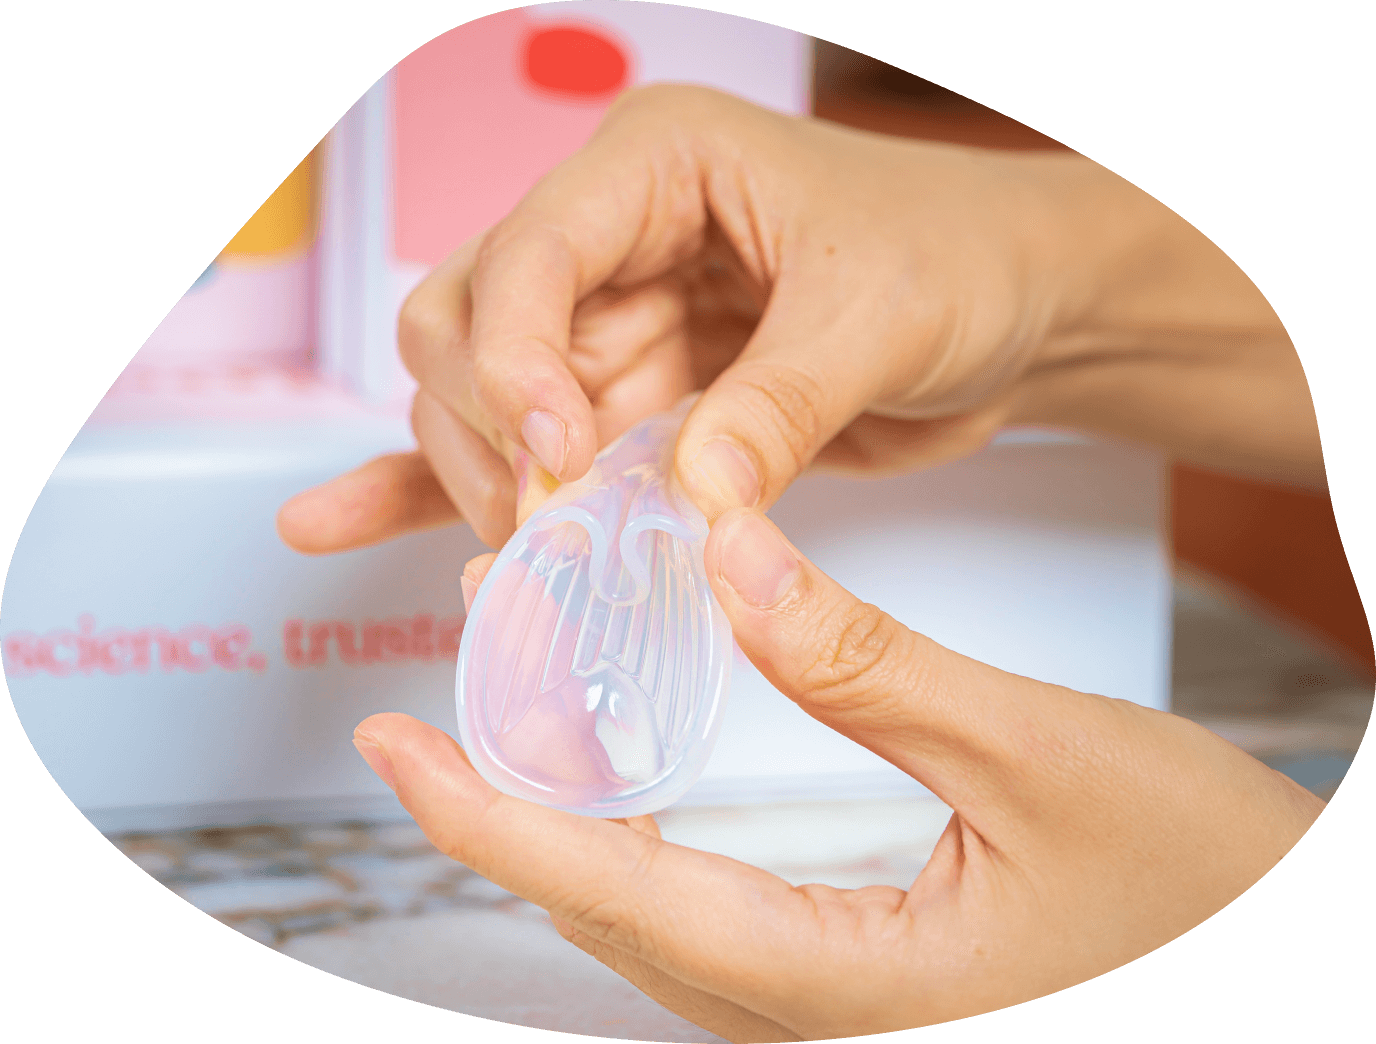 woman pinches fertility aid Sperm Guide’s flap to form U-shape